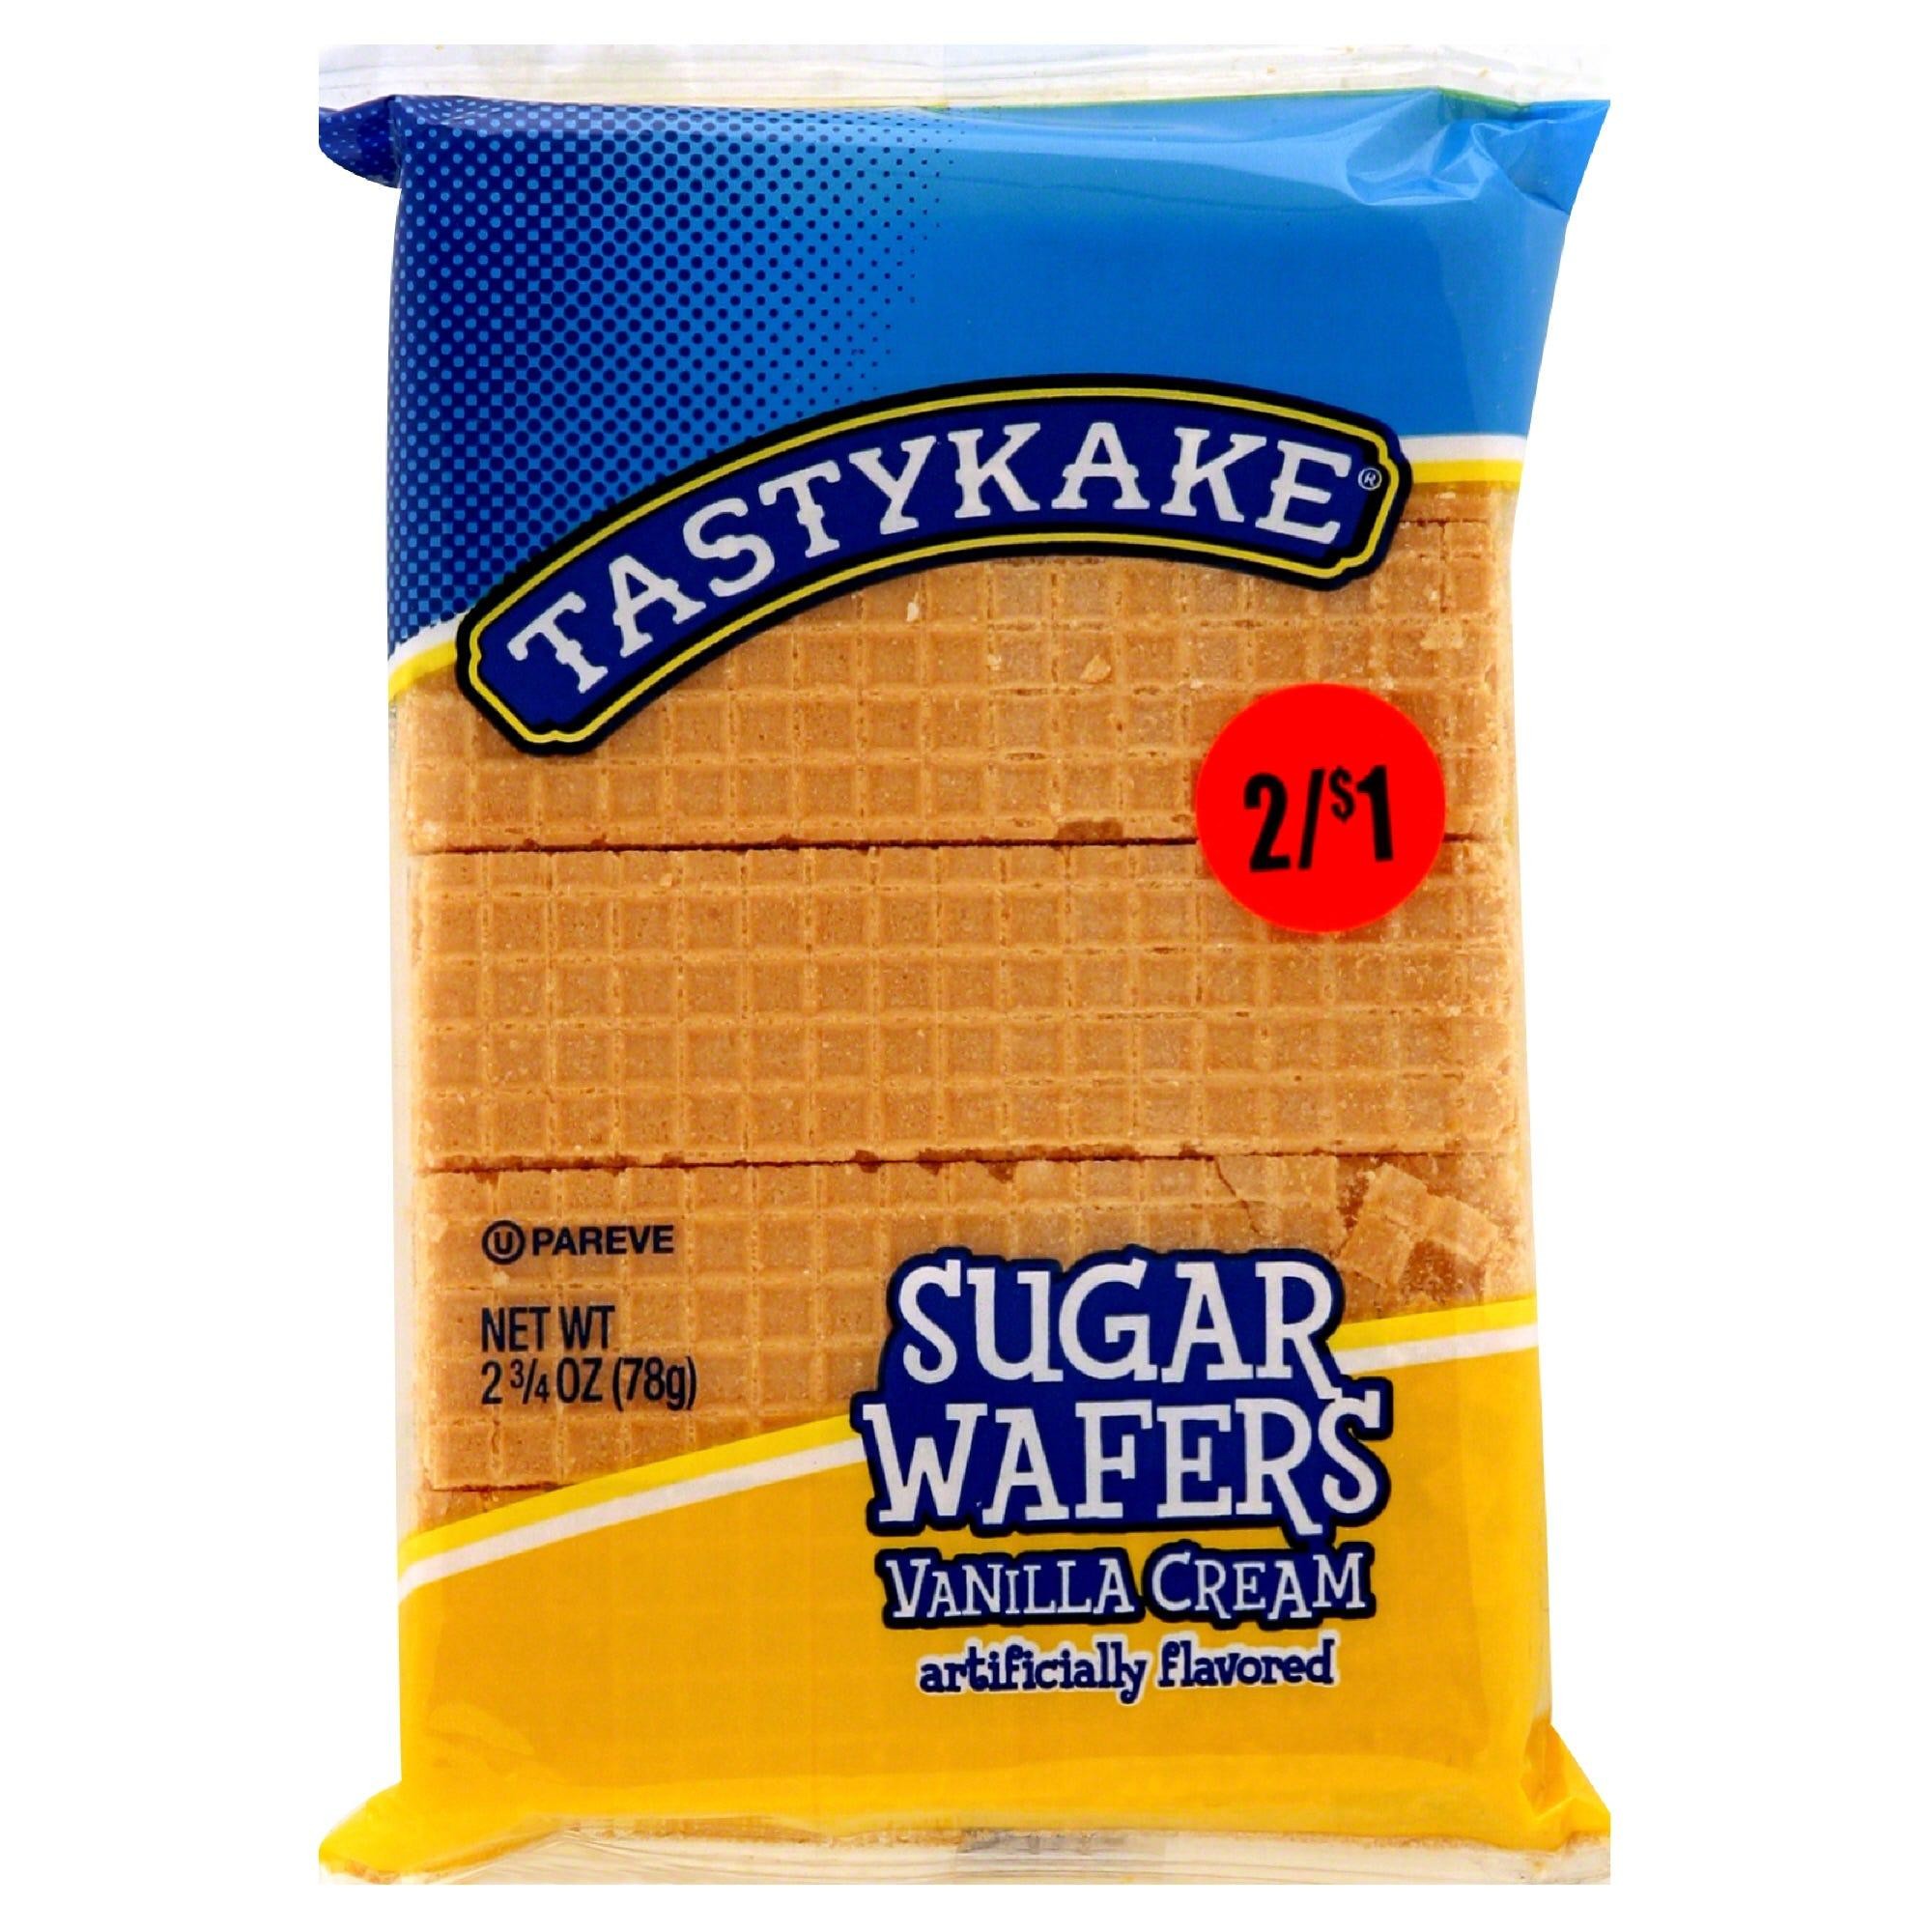 Tastykake Sugar Wagers, Vanilla Cream - 2.75 Oz